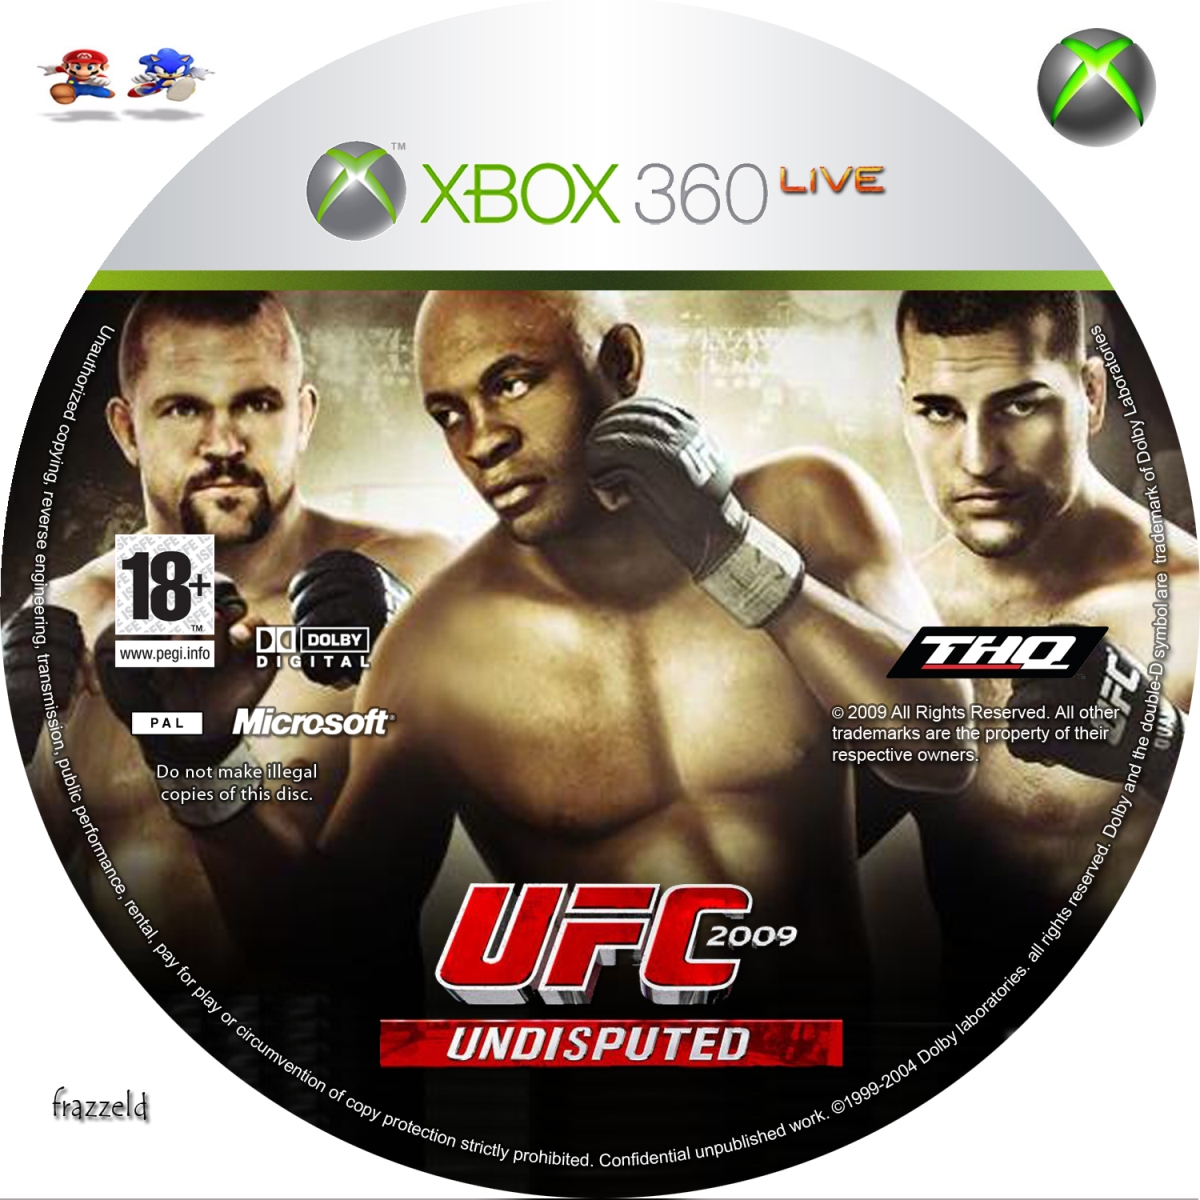 Игры на xbox 360 язык. UFC 2009 Undisputed Xbox 360. UFC 3 Undisputed Xbox 360 диск. Обложка УФС 3 Xbox 360. Диск для Xbox 360 UFC 2.